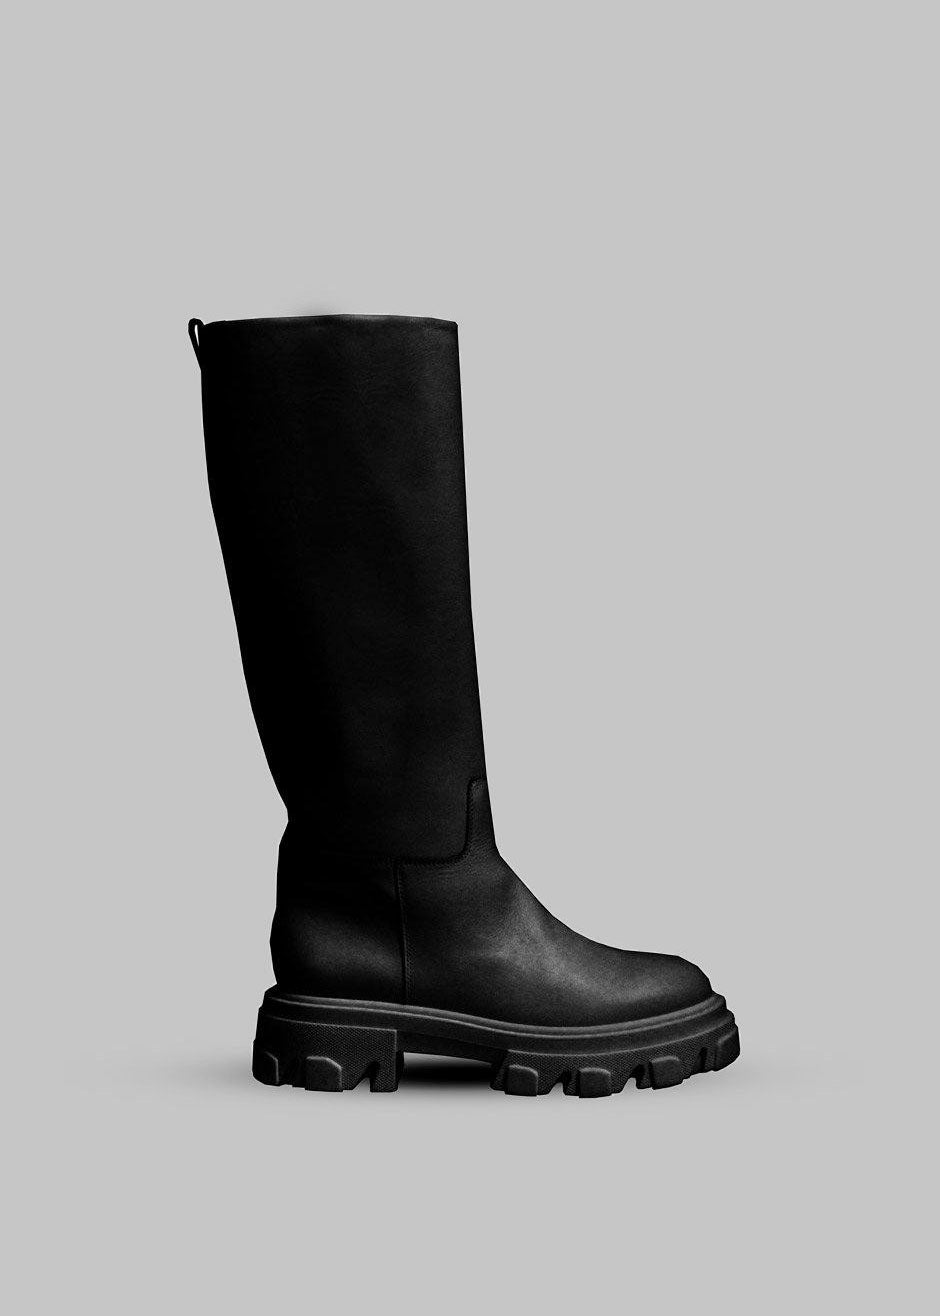 GIA x Pernille Teisbaek Tubular Lug Boots - Black